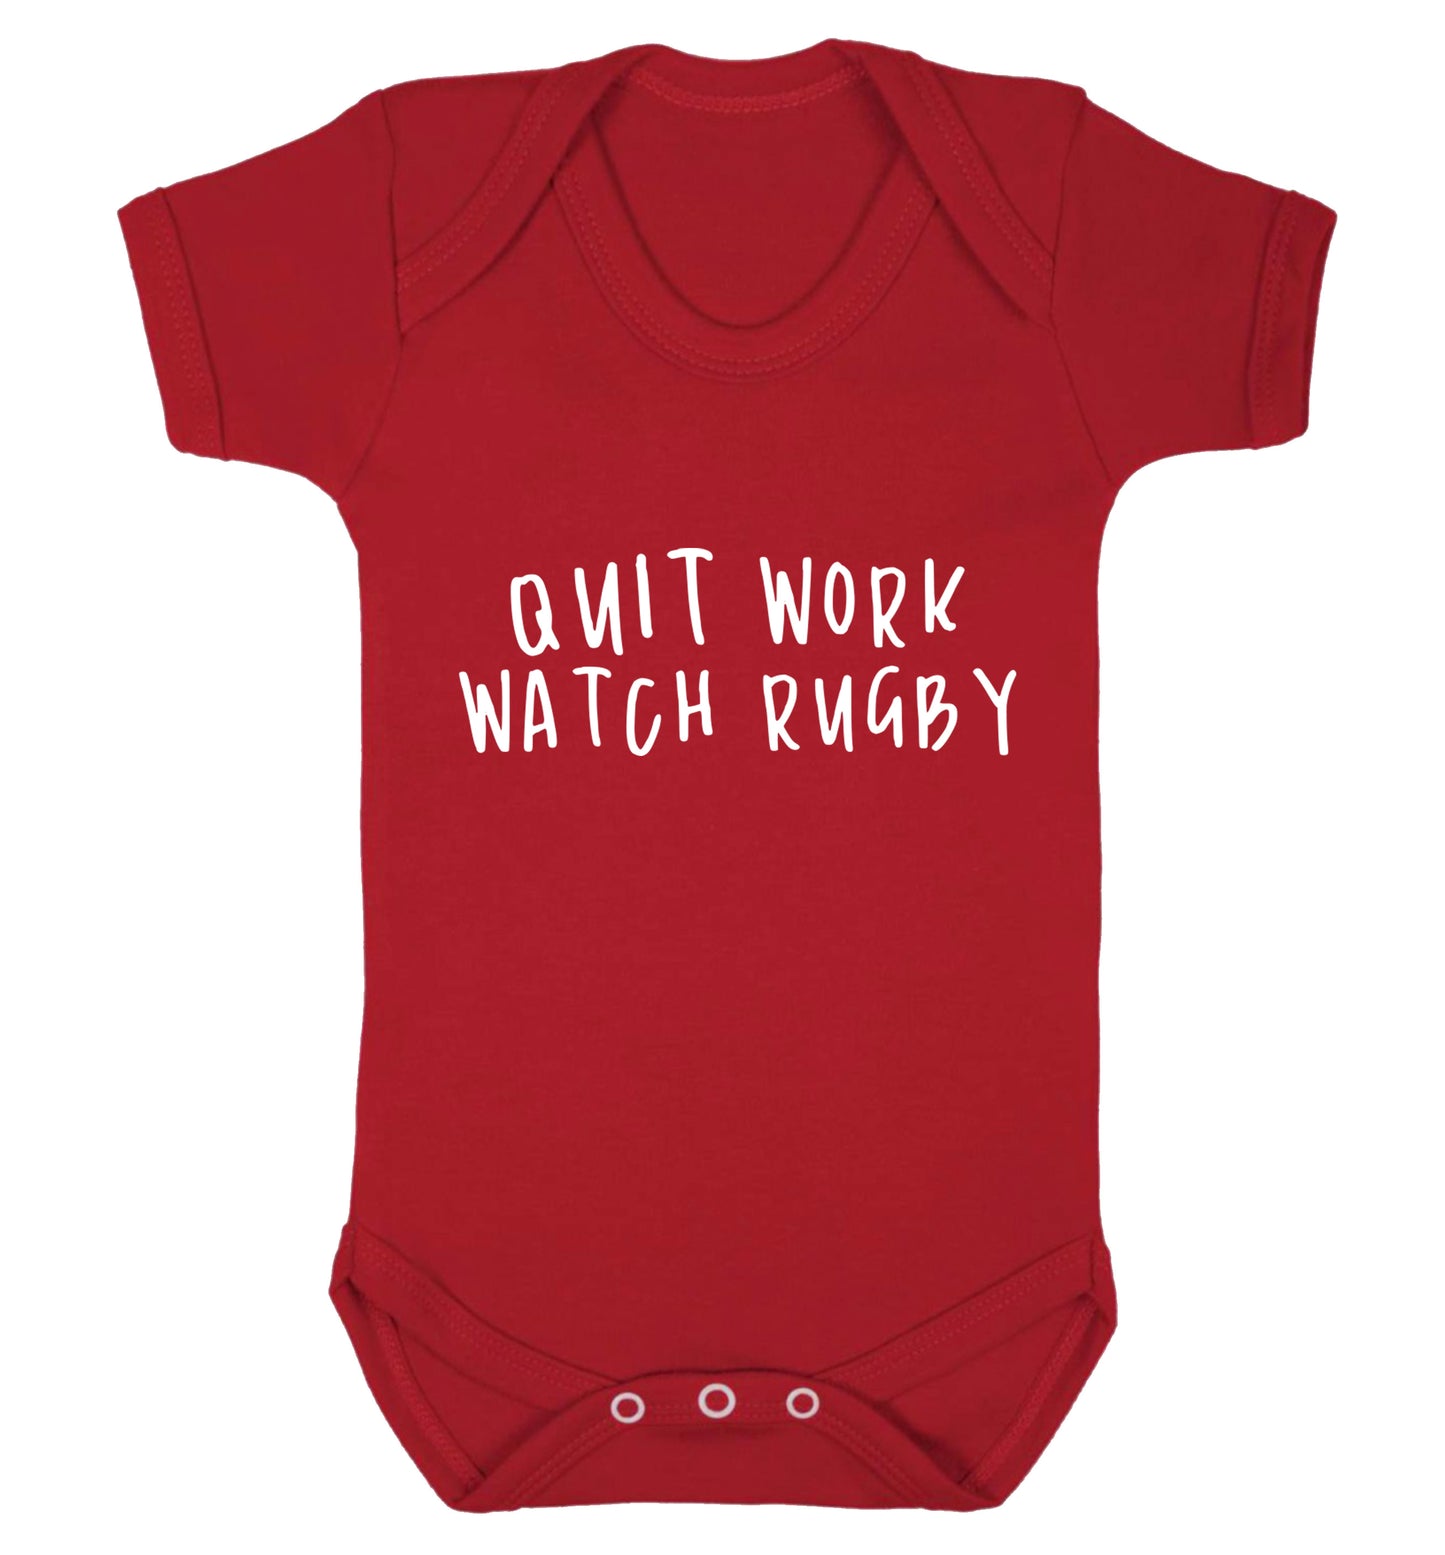 Quit work watch rugby Baby Vest red 18-24 months